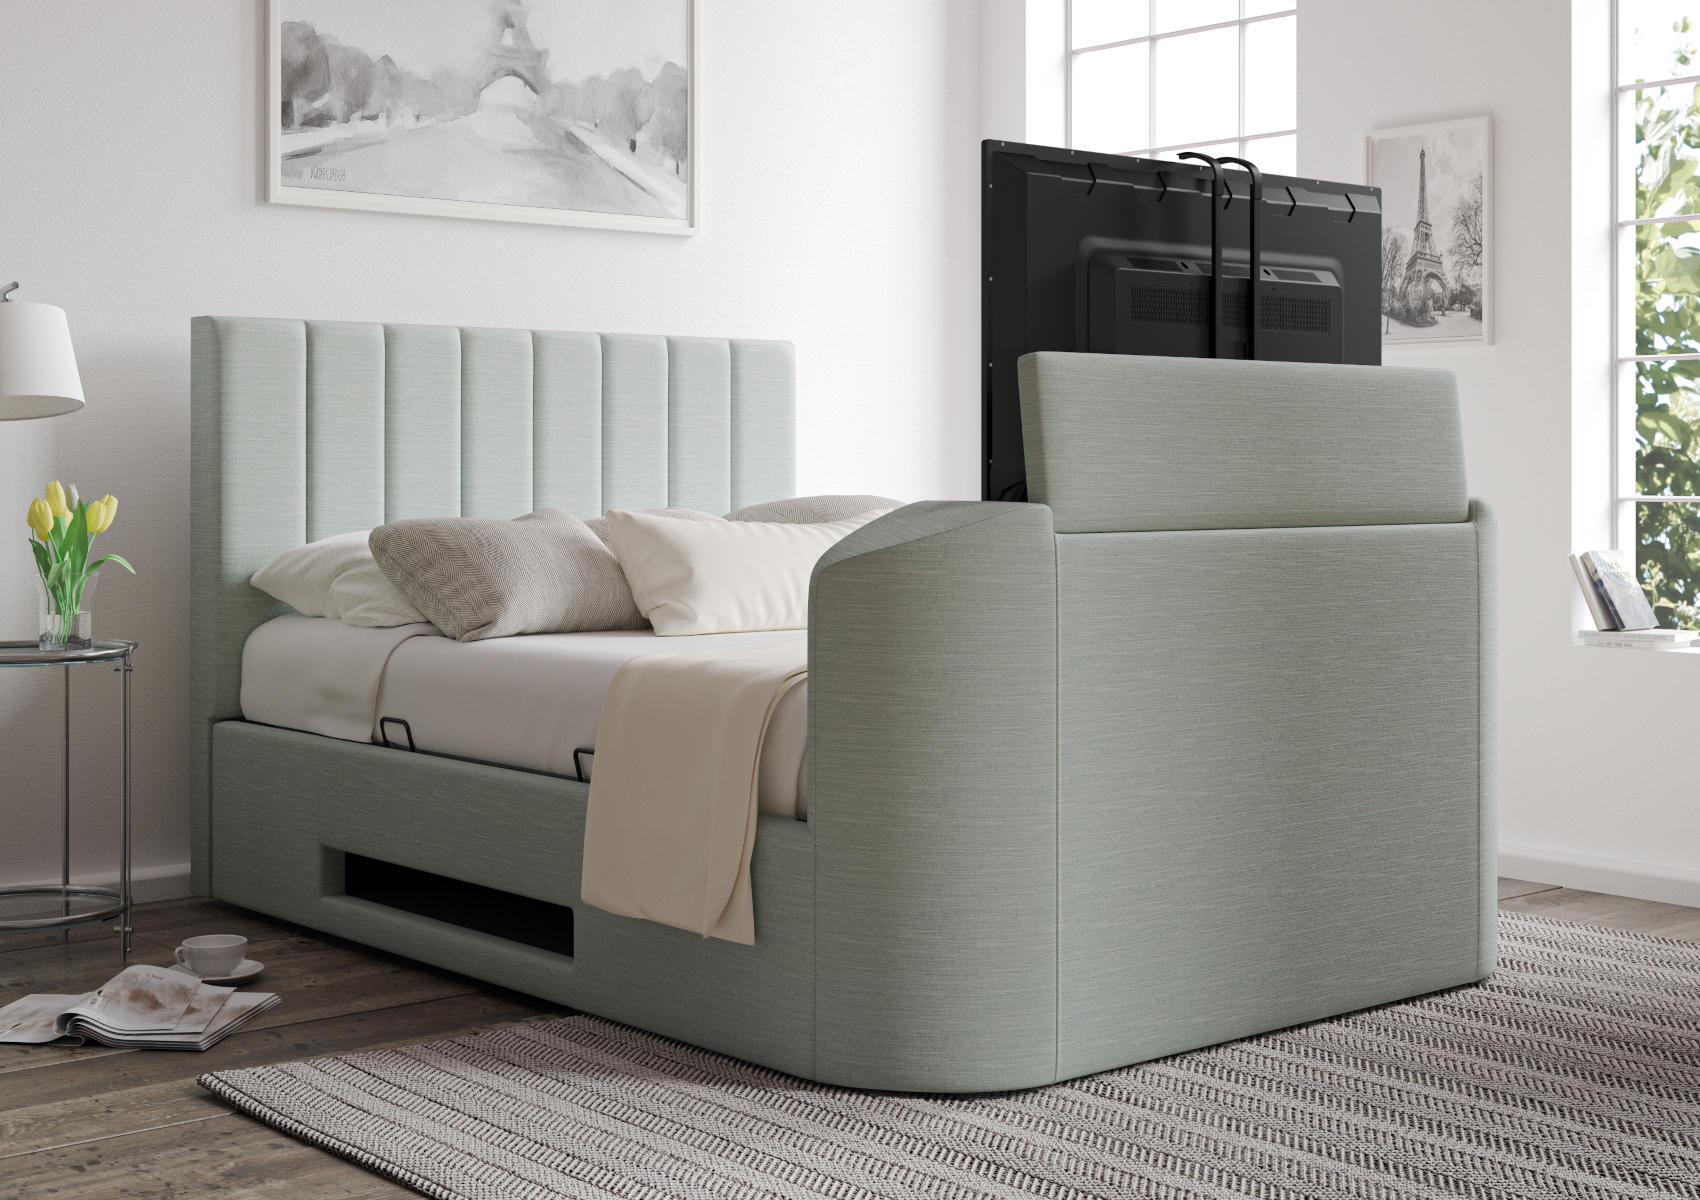 View Berkley Linea SeaBlue Upholstered Double Multifunctional Ottoman Smart TV Bed Time4Sleep information